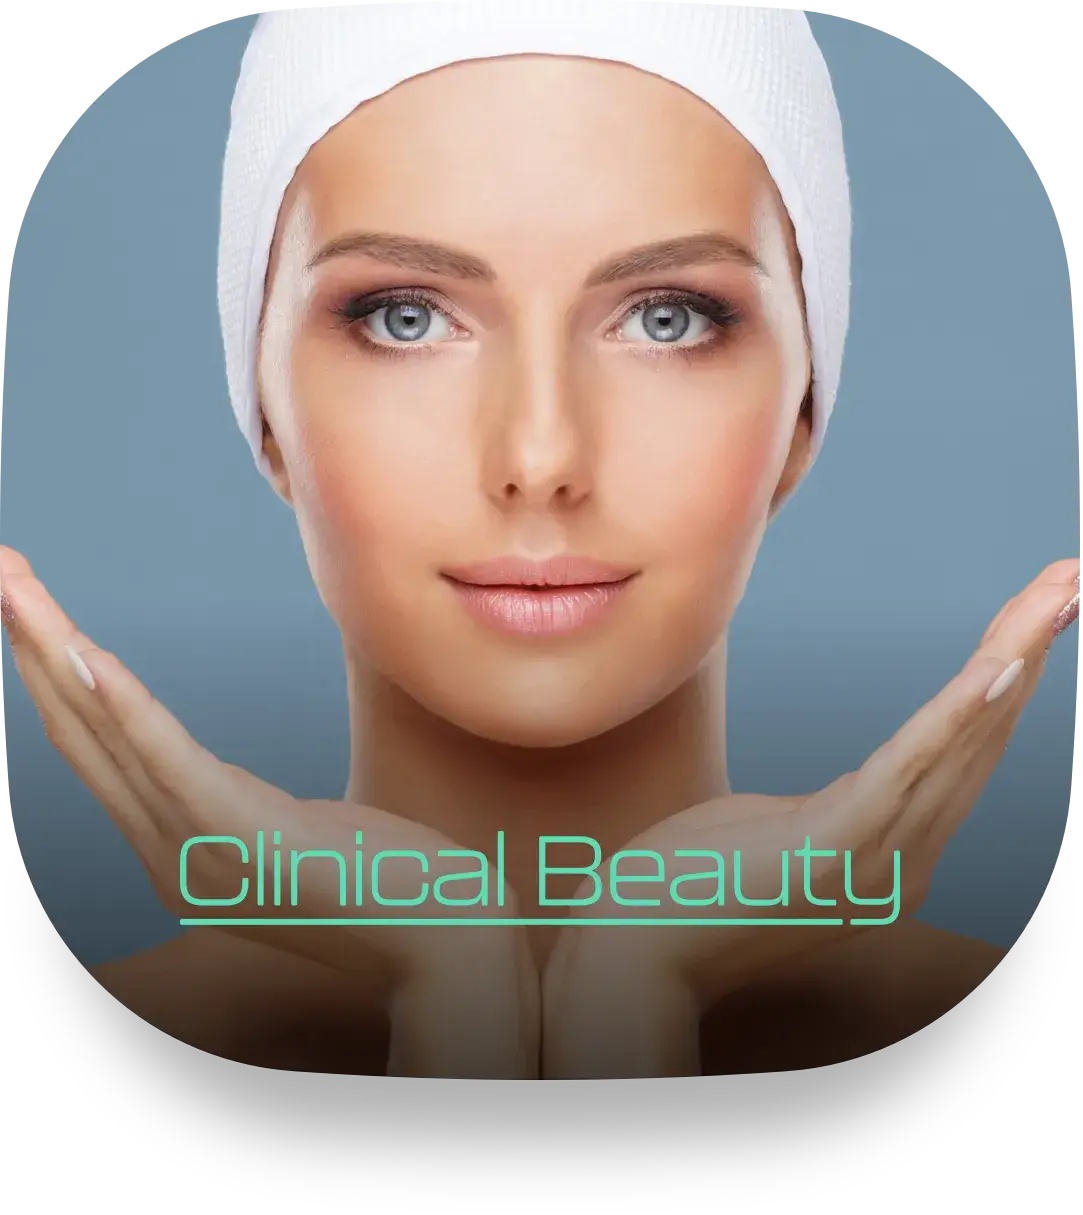 Clinical Beauty Body